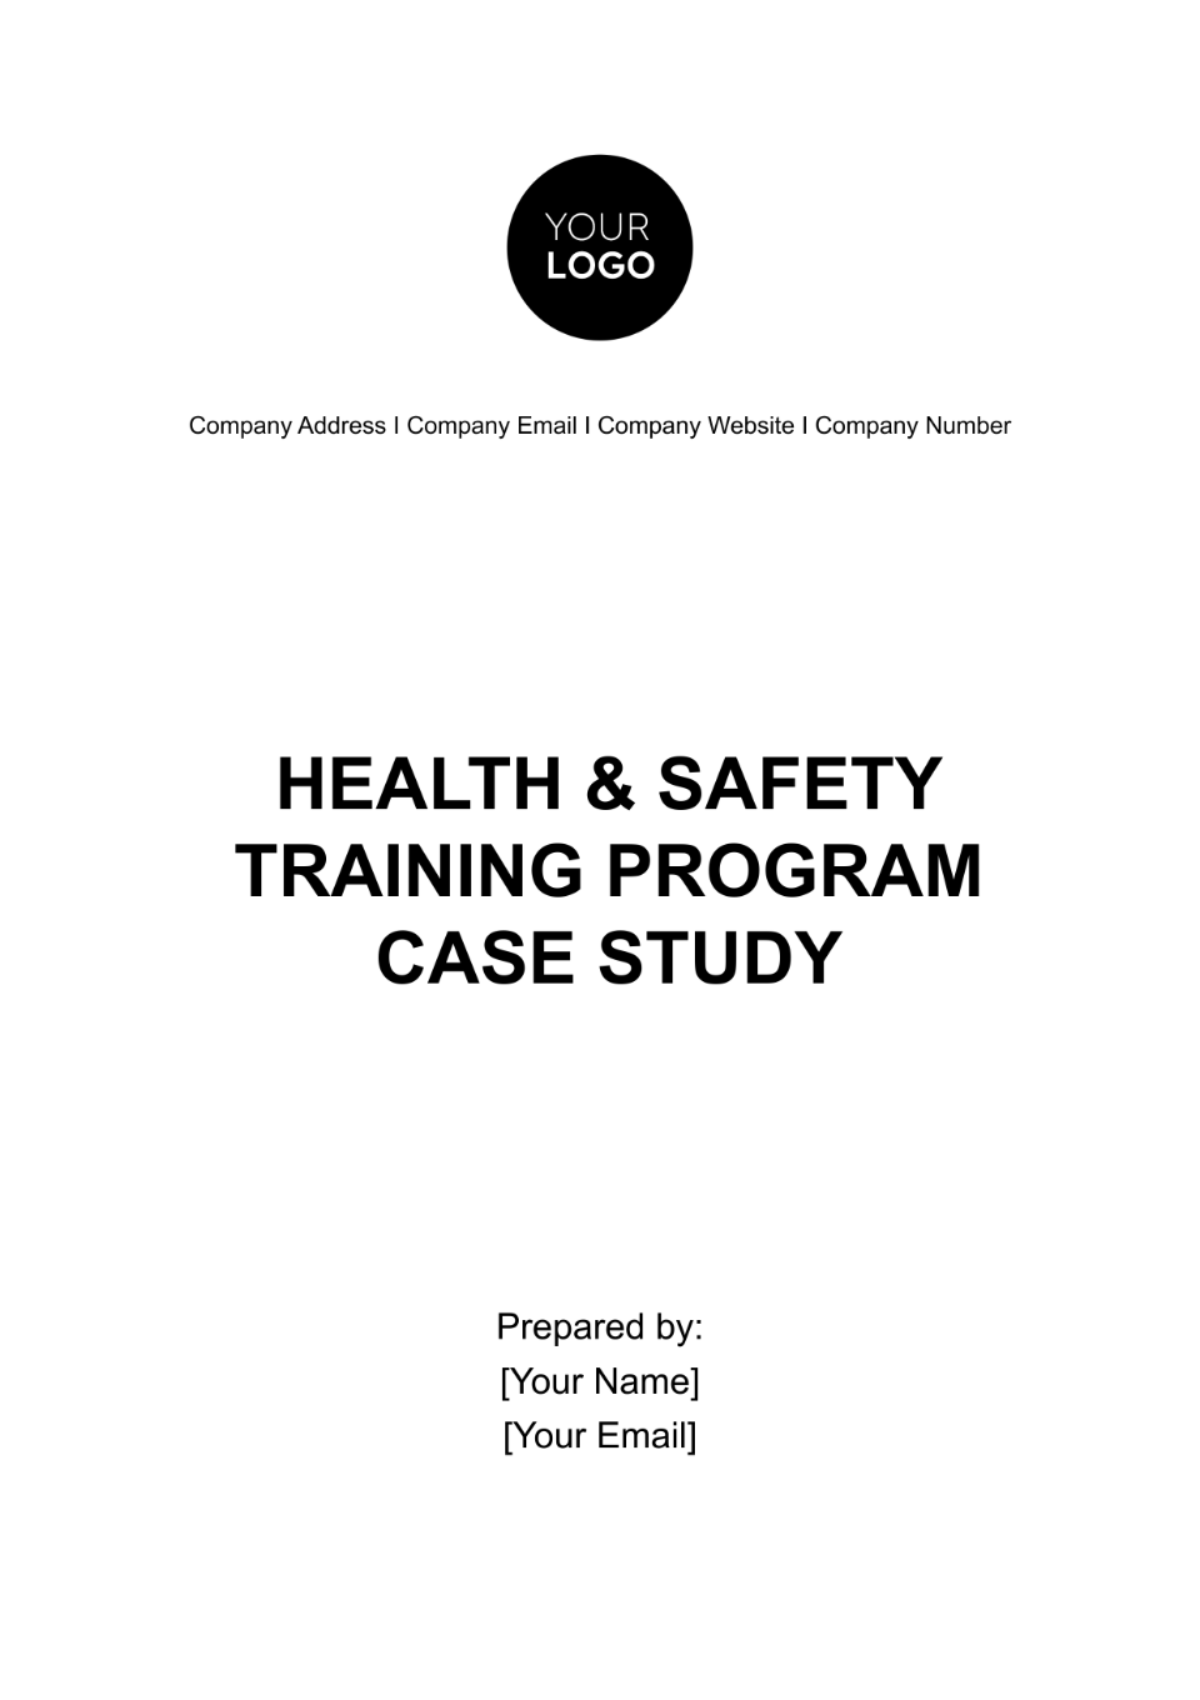 Health & Safety Training Program Case Study Template